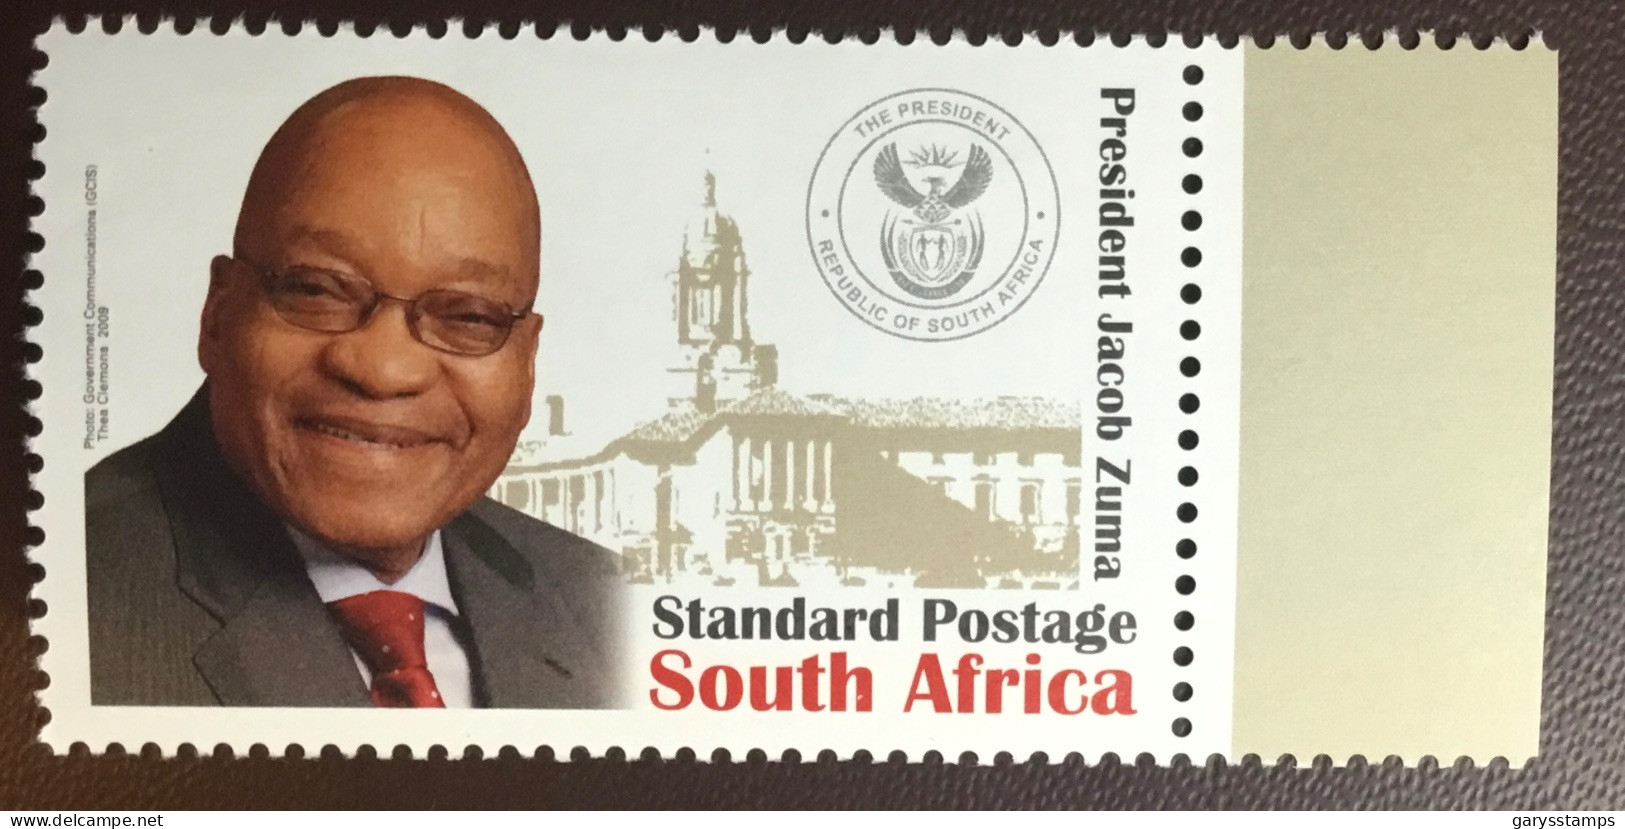 South Africa 2009 President Zuma MNH - Nuevos